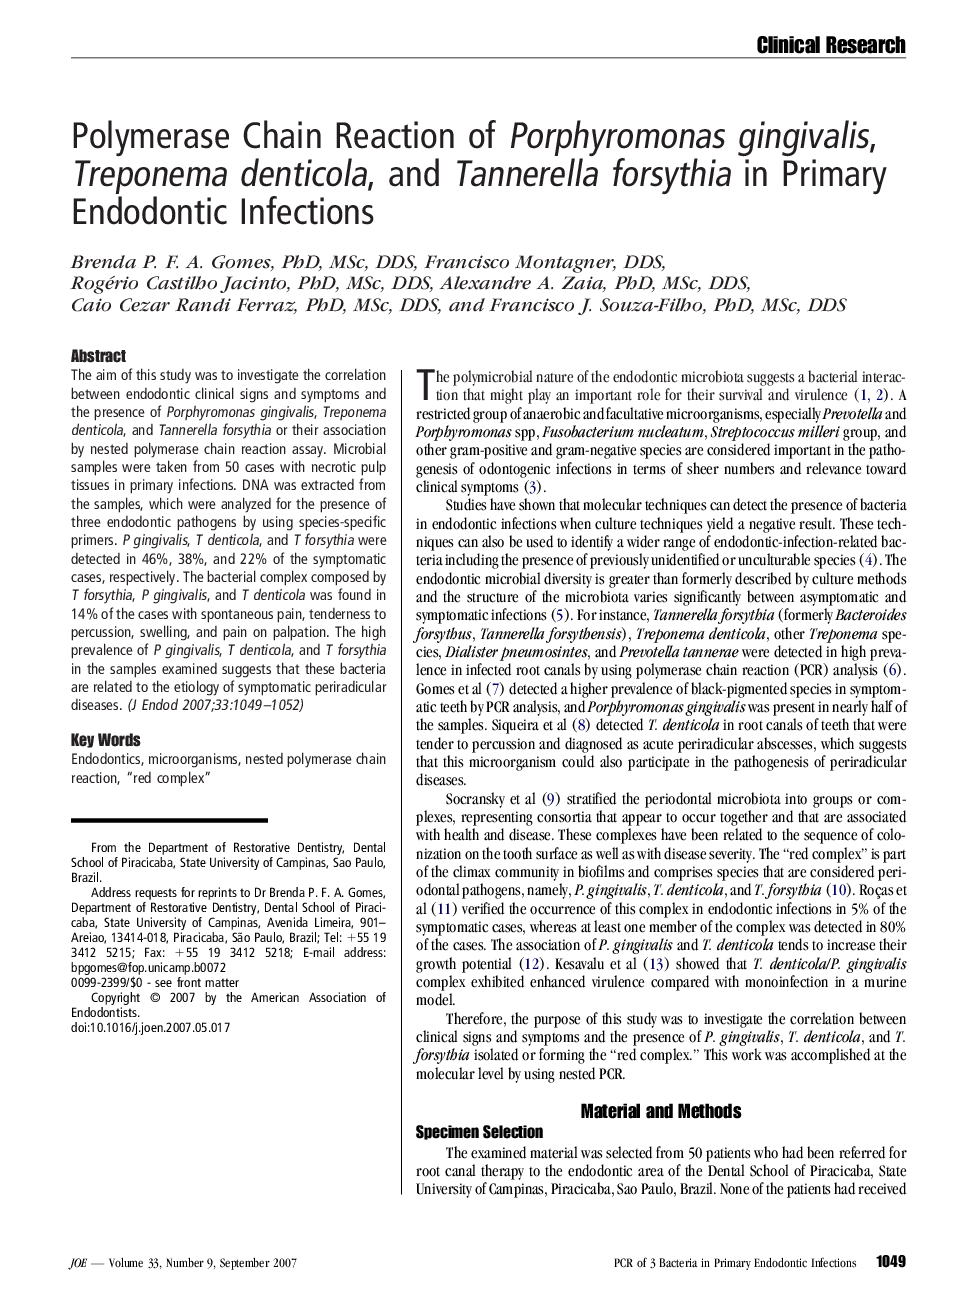 Polymerase Chain Reaction of Porphyromonas gingivalis, Treponema denticola, and Tannerella forsythia in Primary Endodontic Infections